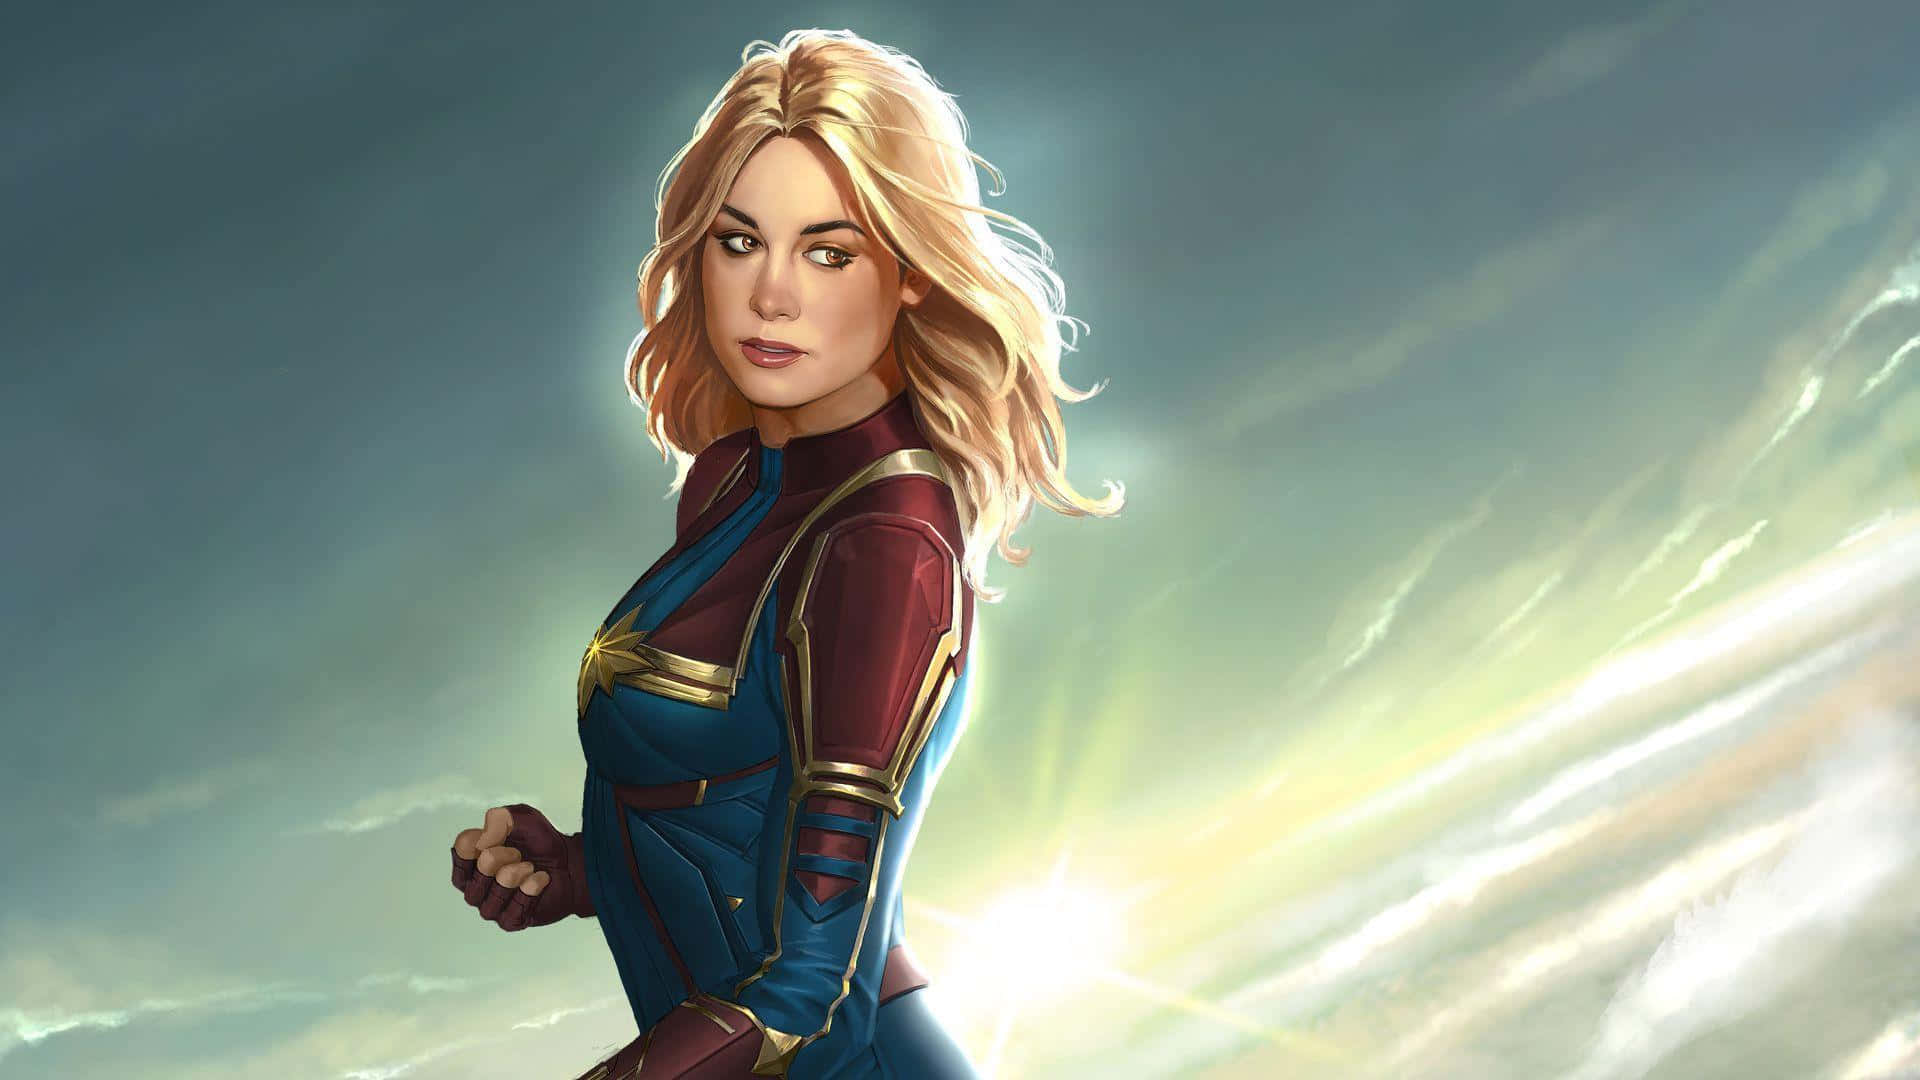 Brie Larson as Captain Marvel Soaring Through the Skies Wallpaper